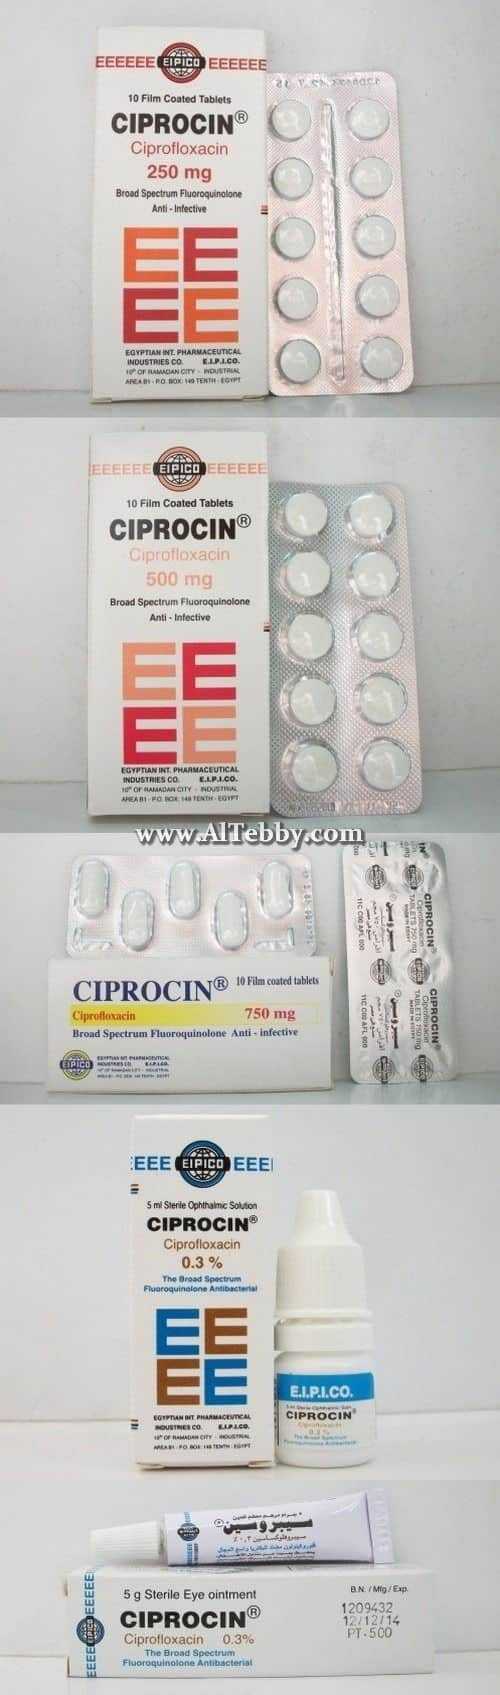 سيبروسين Ciprocin دواء drug